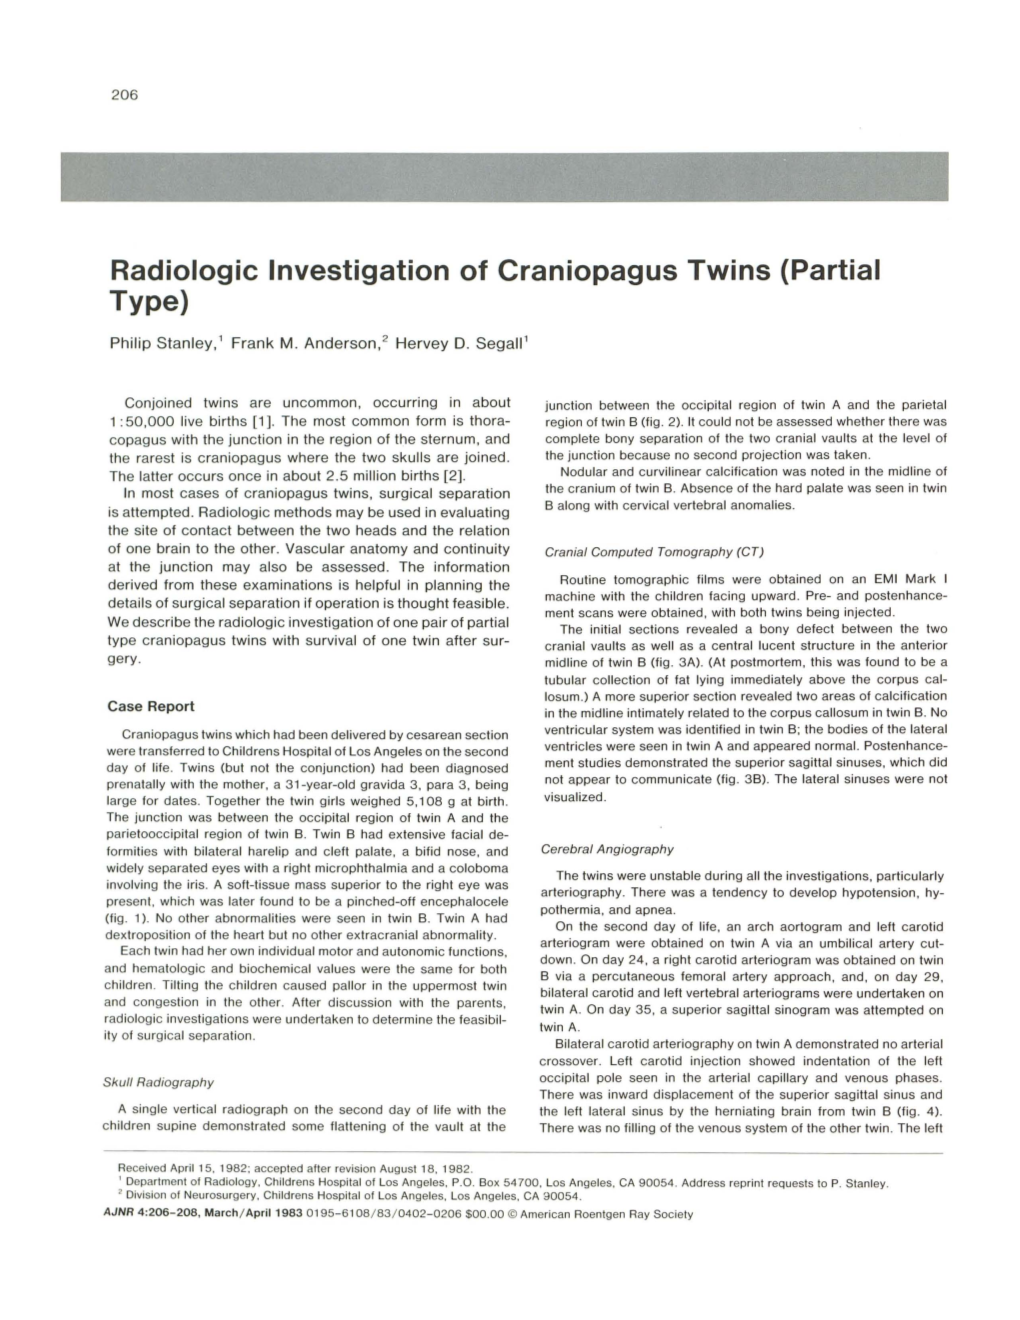 Radiologic Investigation of Craniopagus Twins (Partial Type)